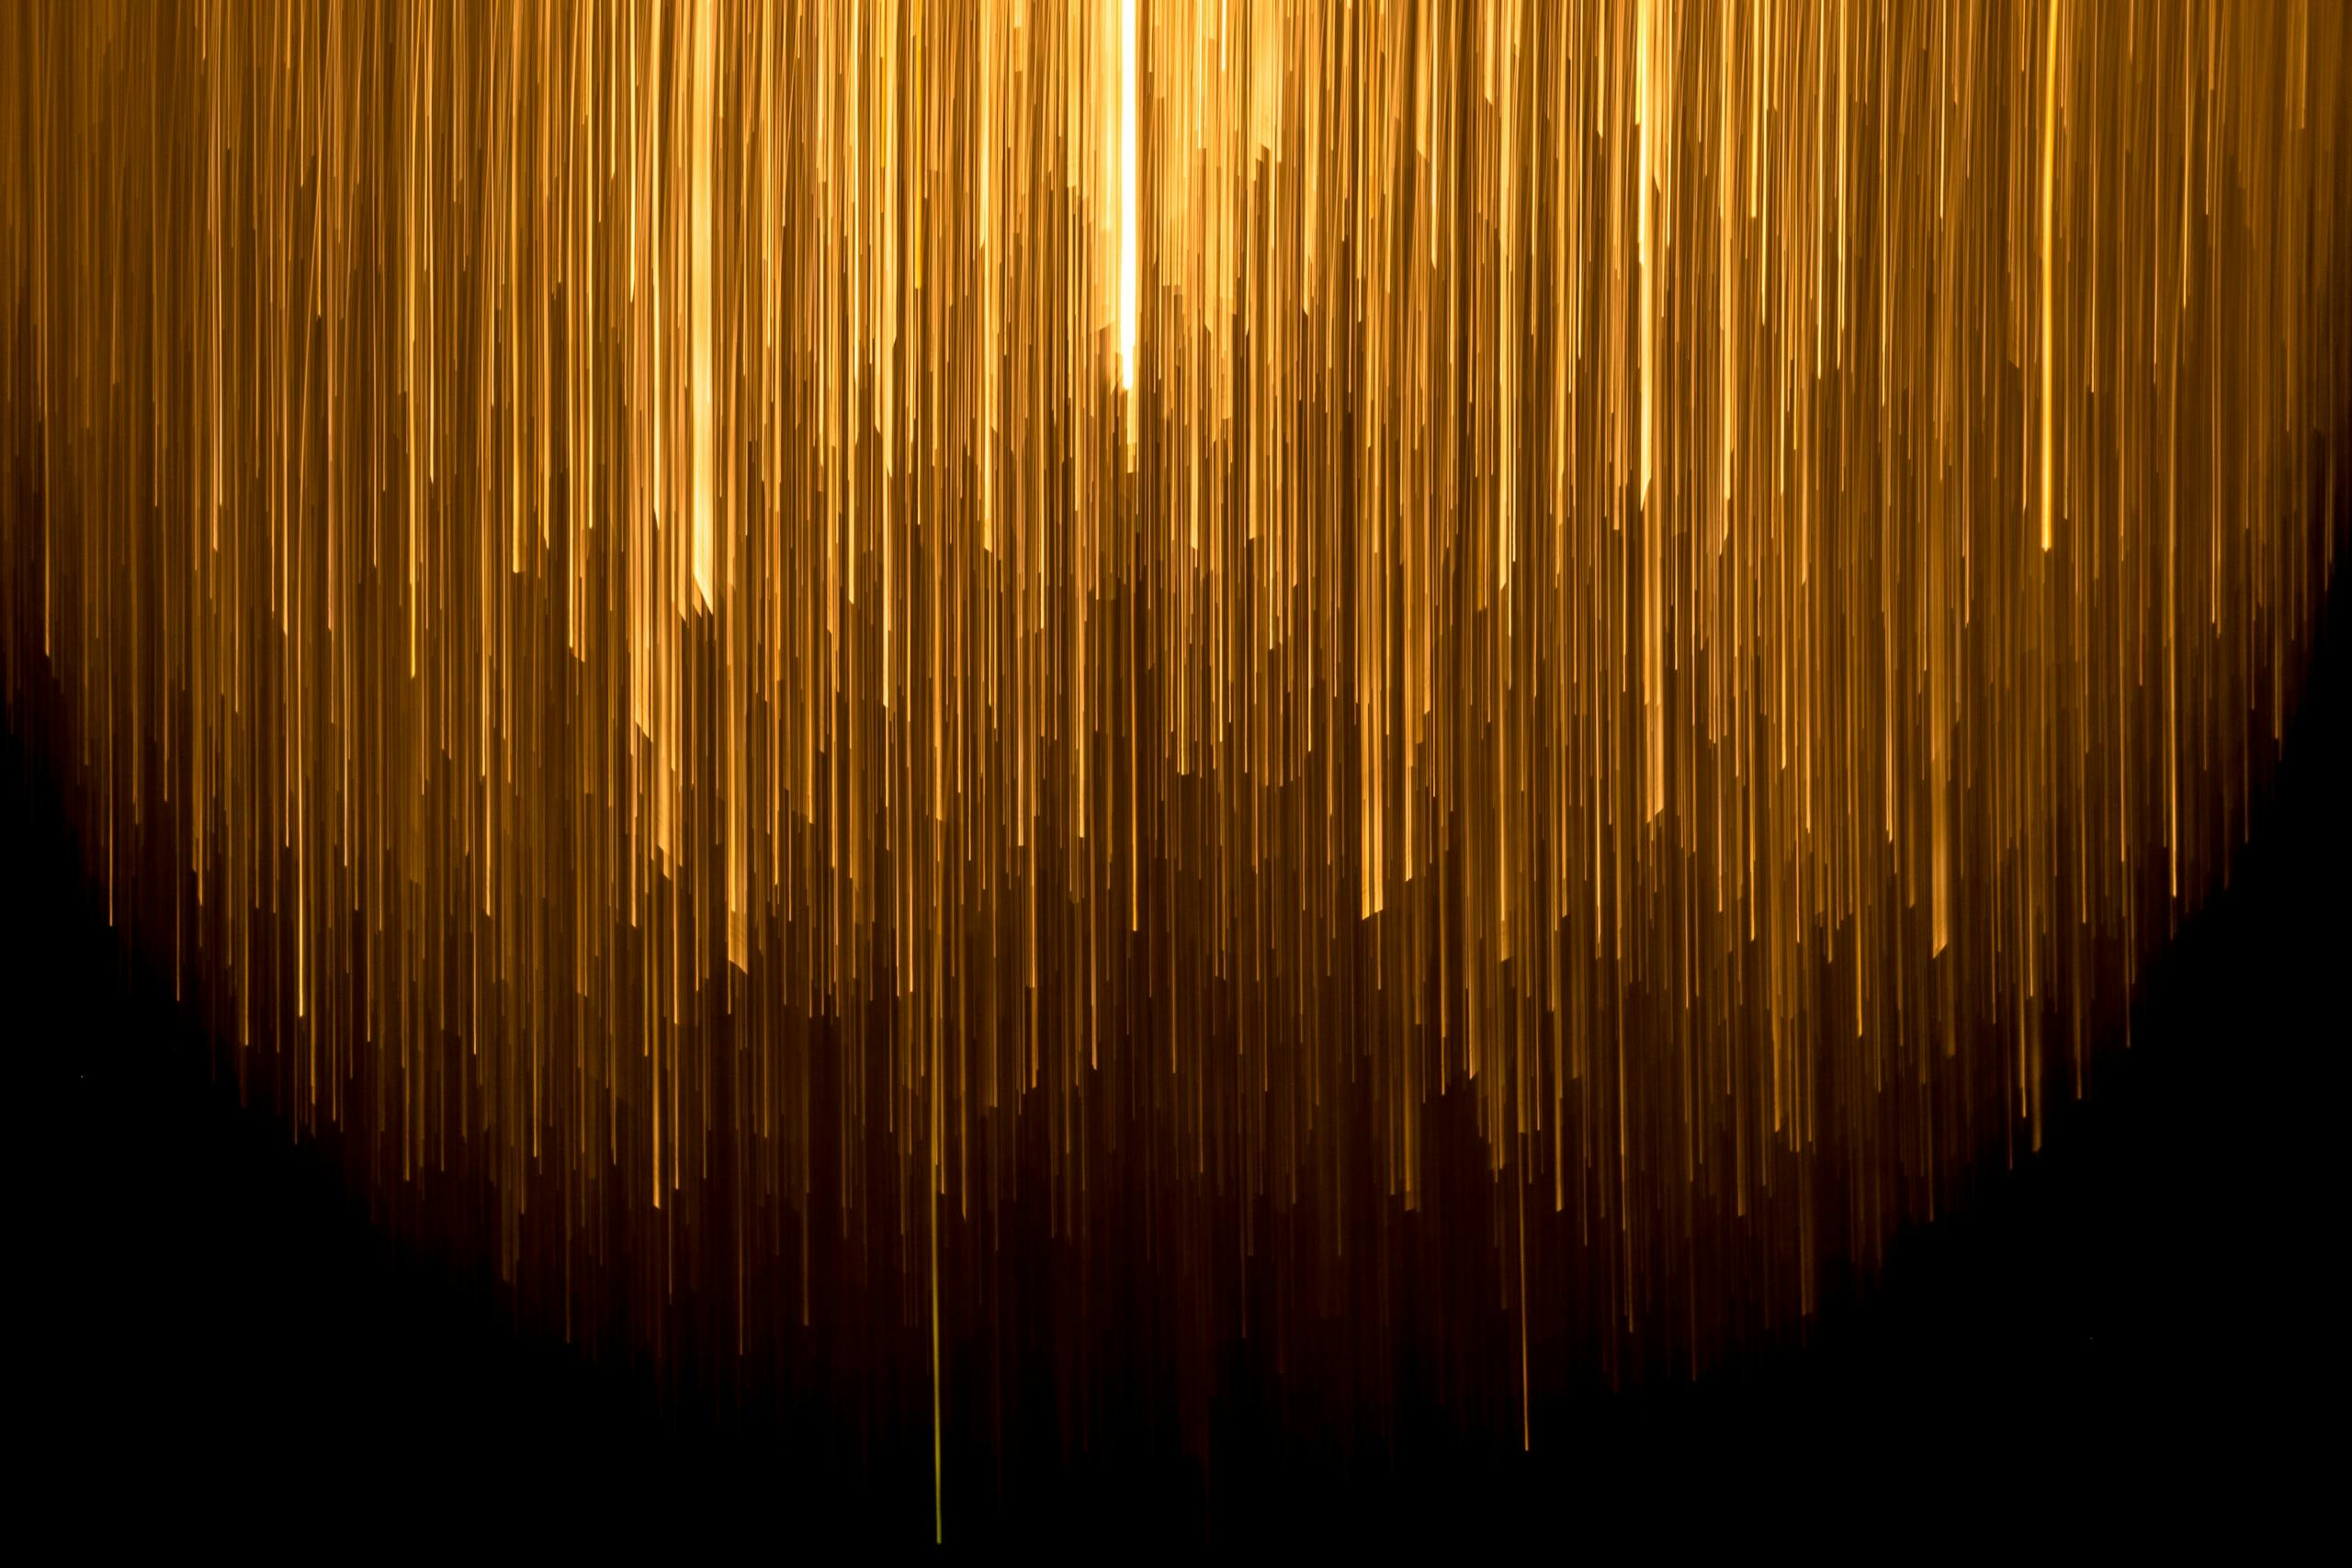 Descending gold bars of light on a dark background